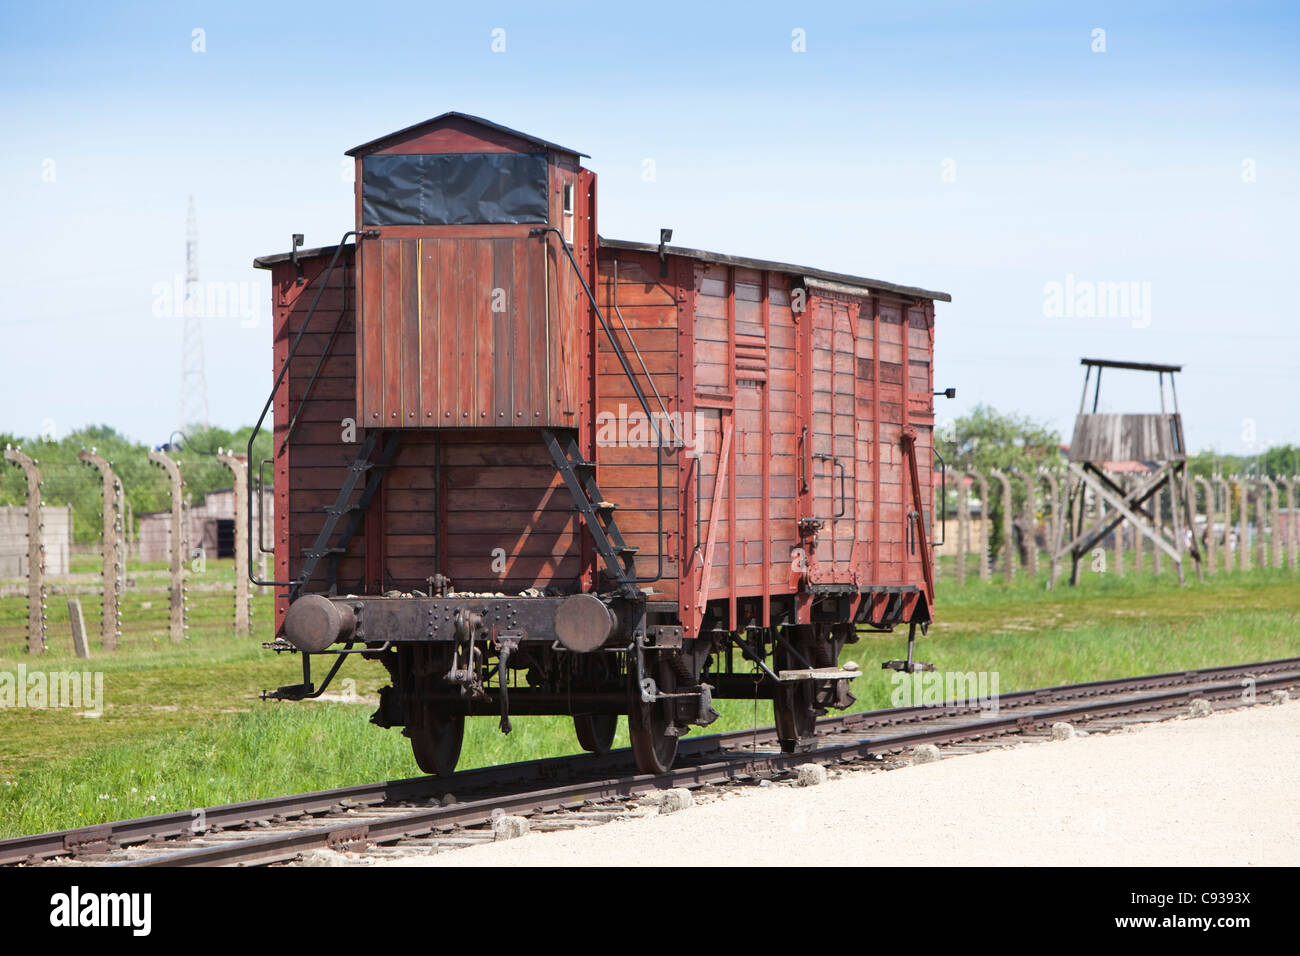 Poland, Brzezinka, Auschwitz II - Birkenau. A freight car used in the transportation of victims to Auschwitz II - Birkenau camp. Stock Photo